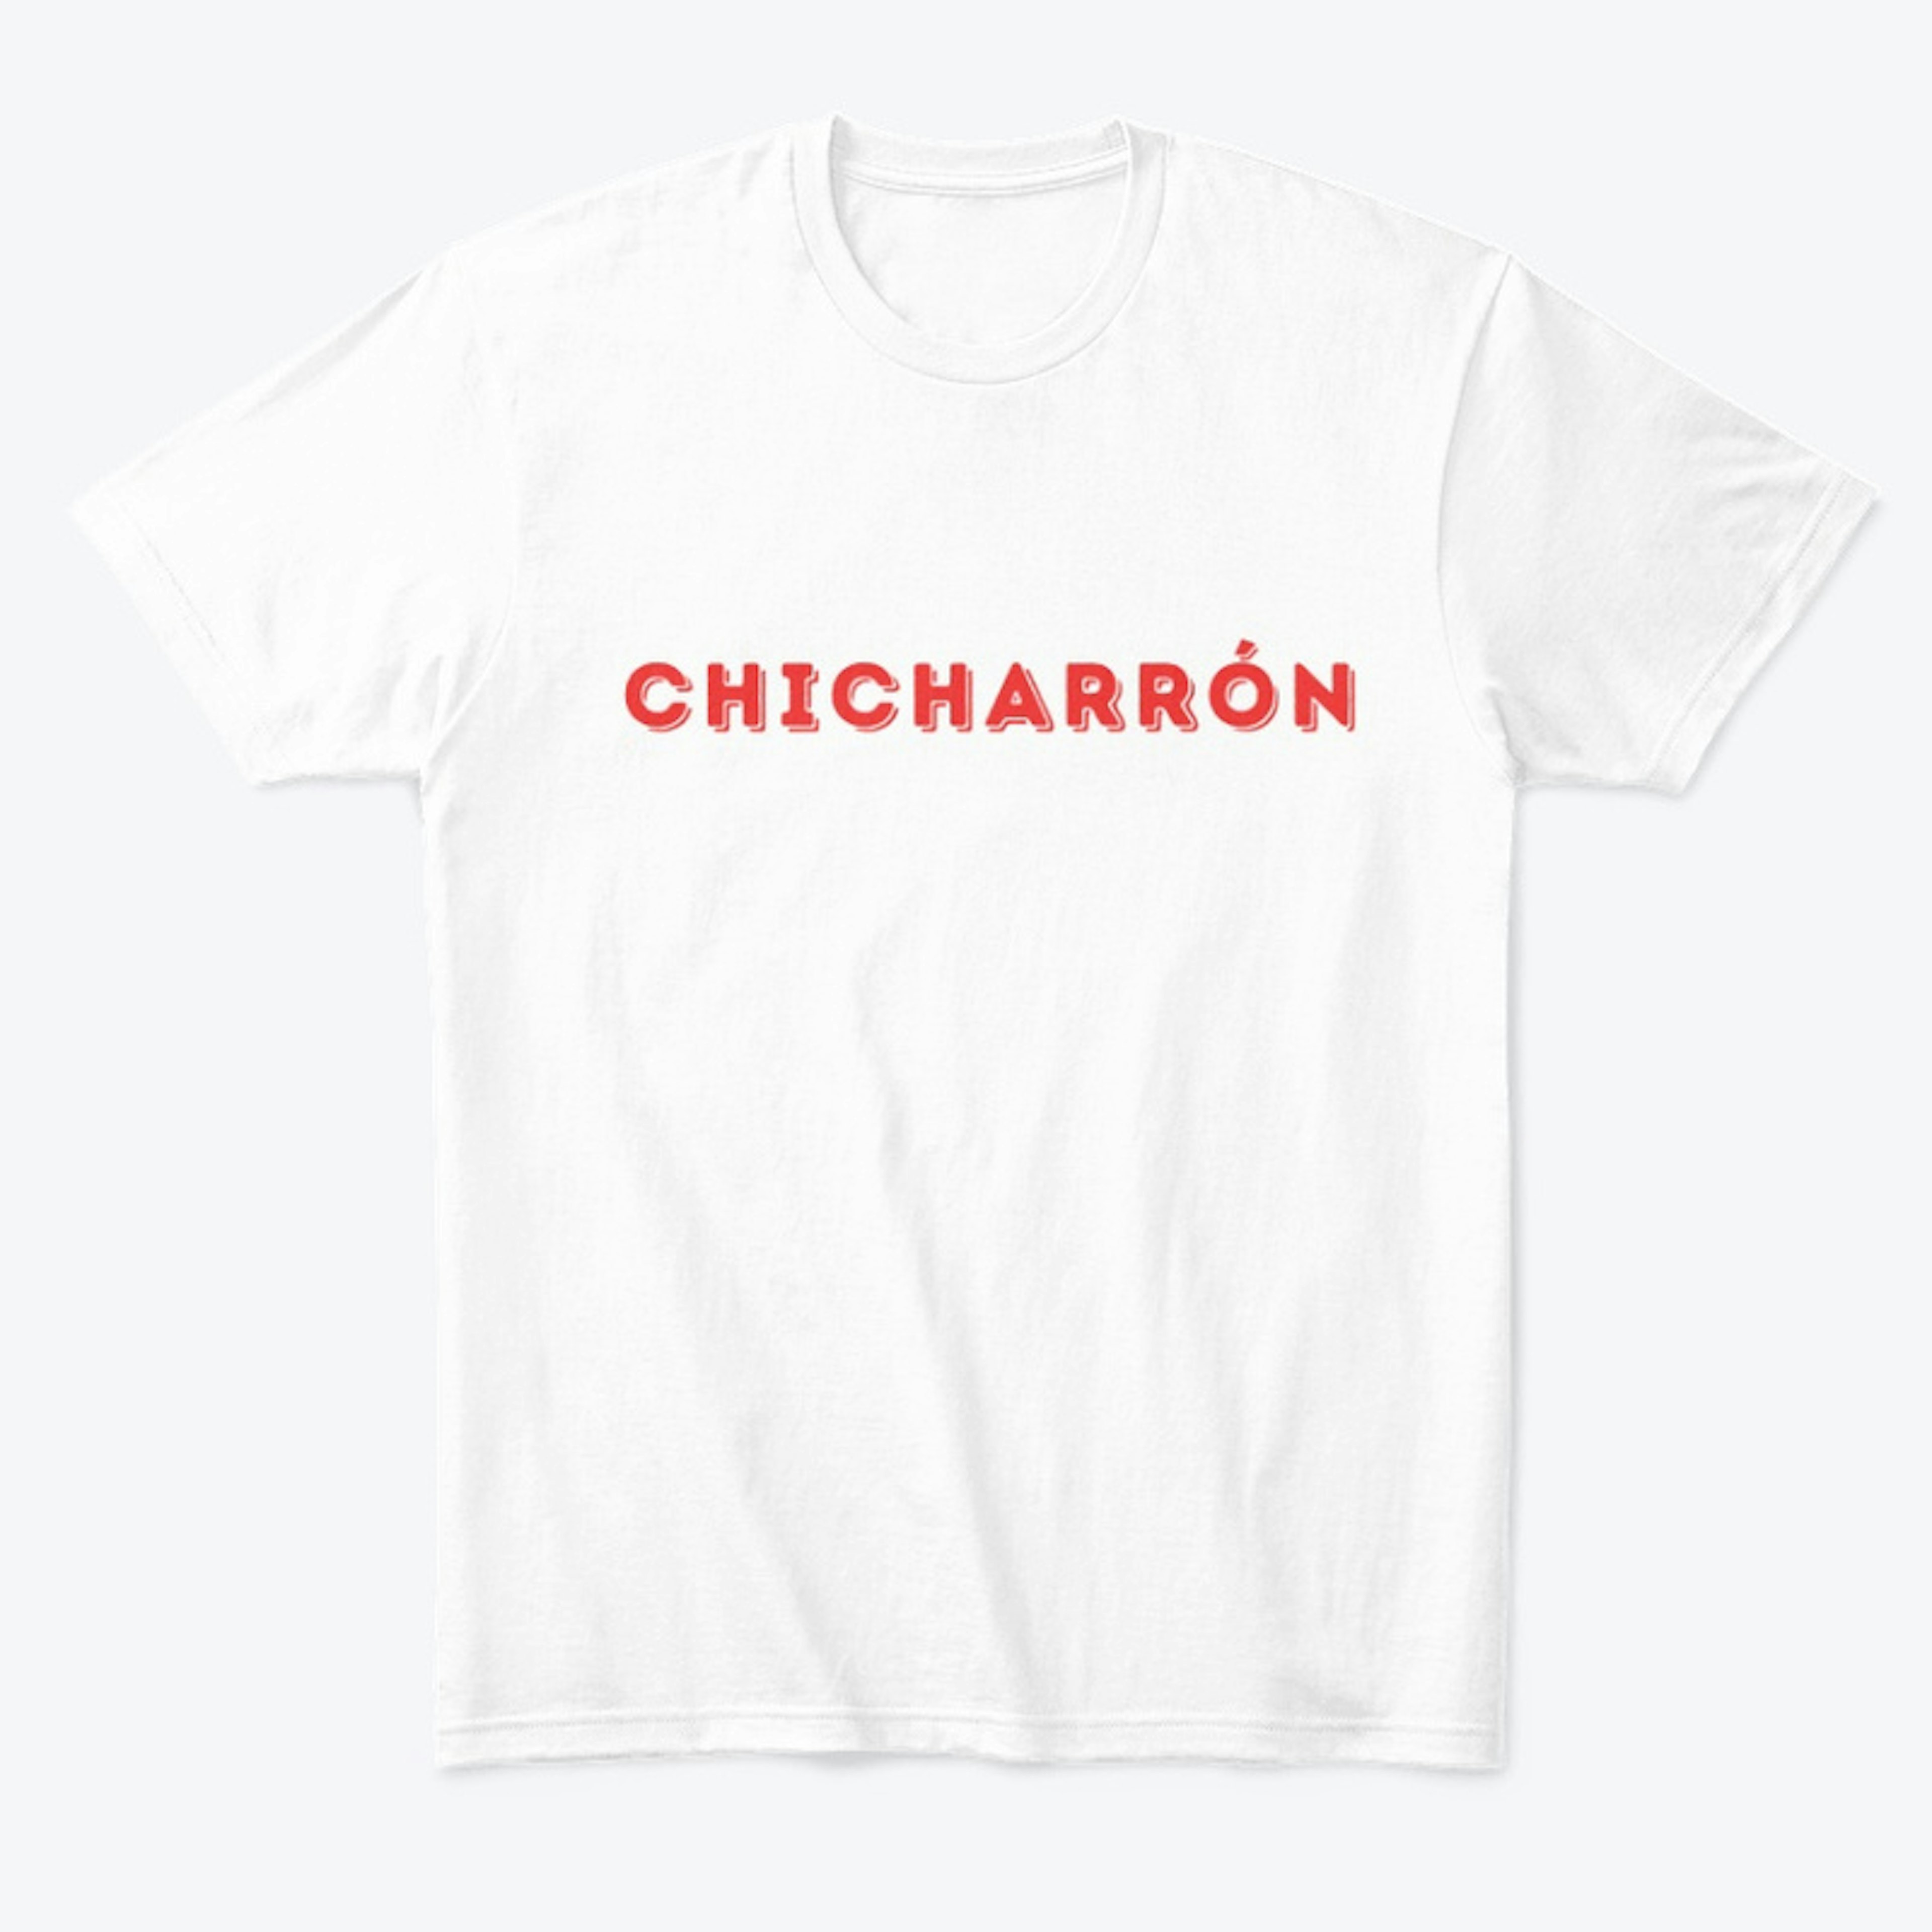 The Chicharrón Tee